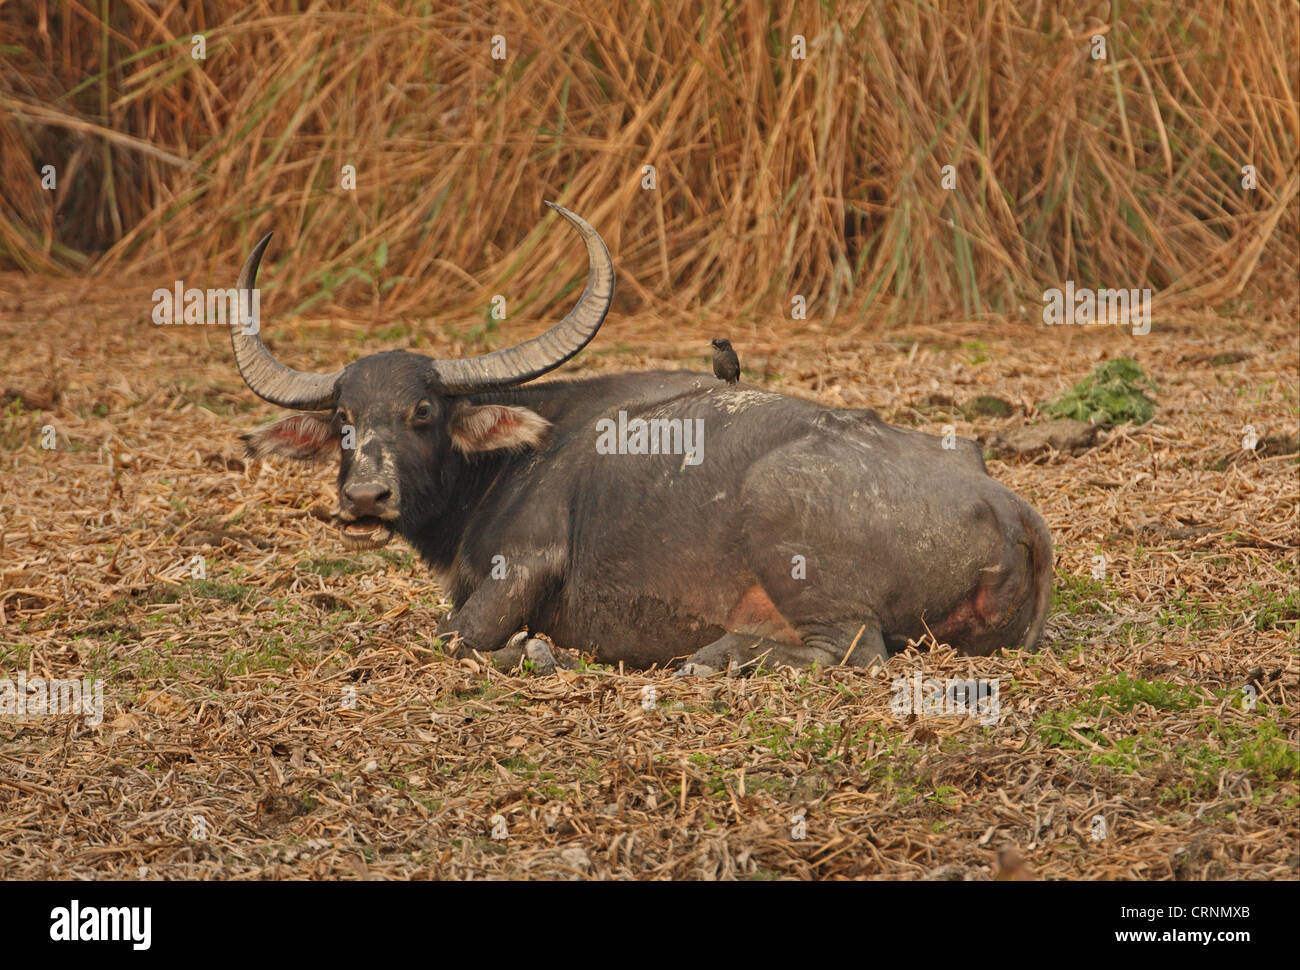 Wild Water Buffalo (Bubalus arnee fulvus) des profils, de mâcher de la CUD, reposant sur un sol de Myna Acridotheres fuscus (Jungle) perché Banque D'Images